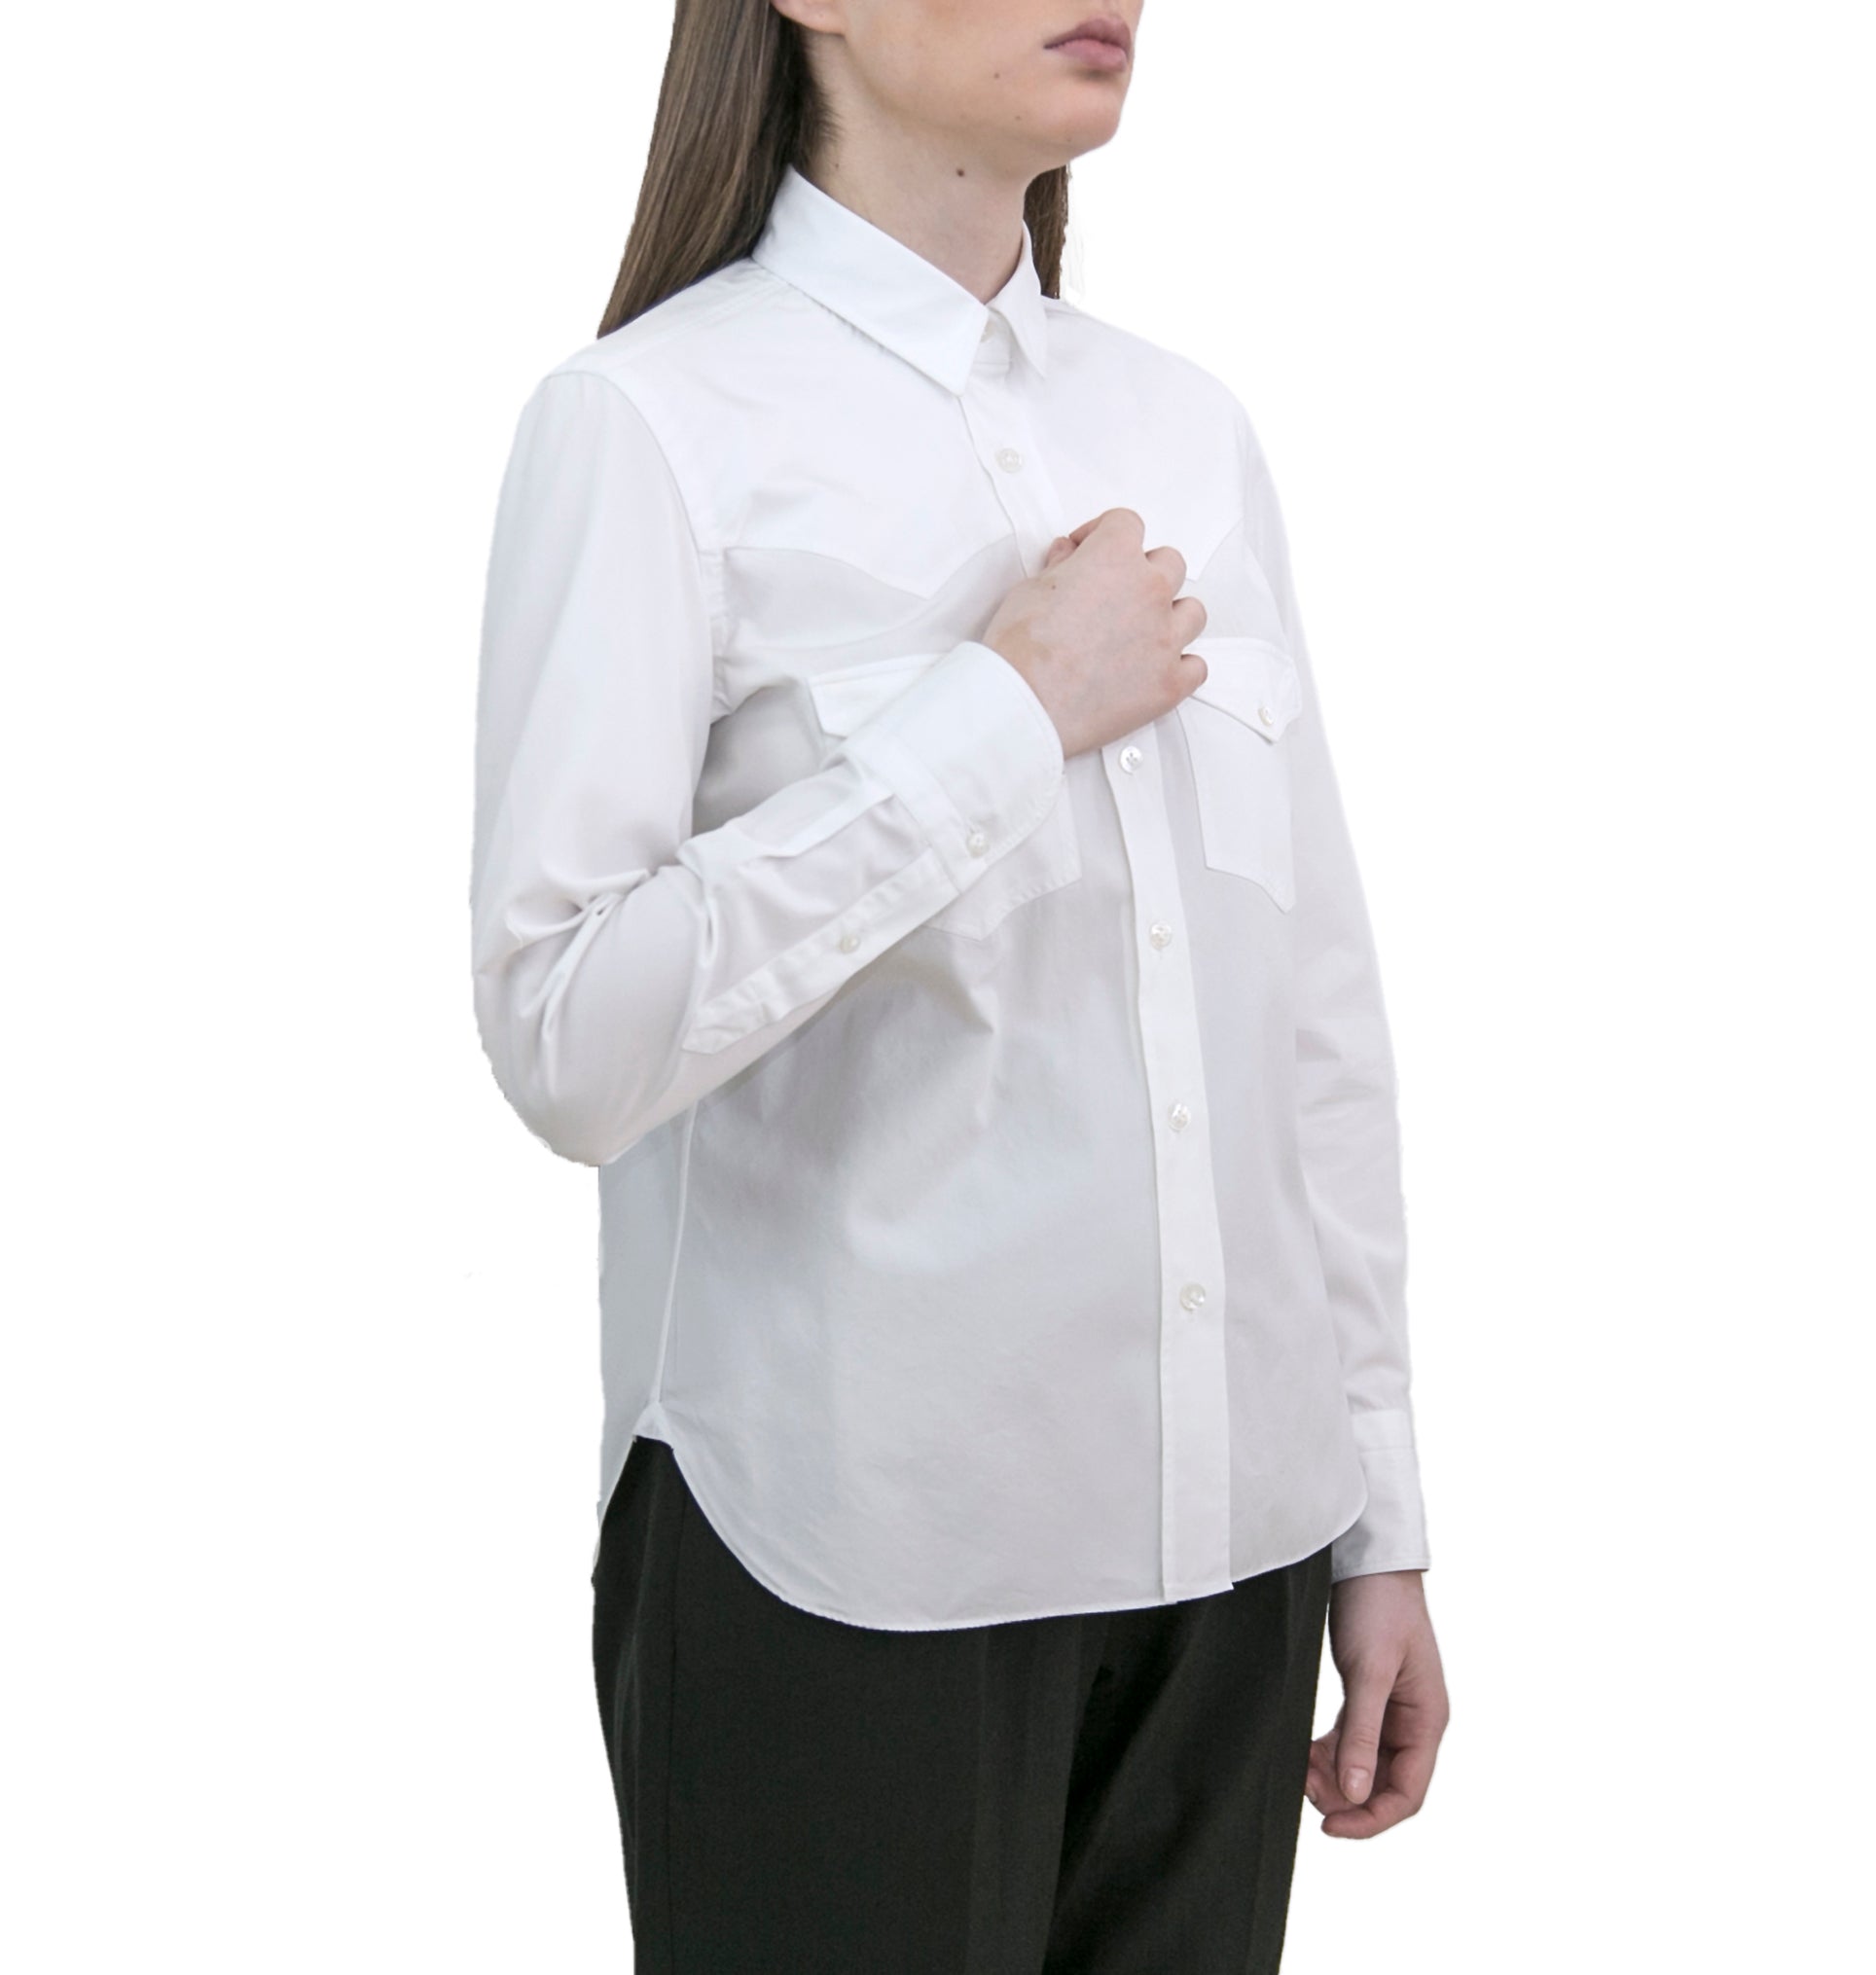 Women's Virginia western shirt white cotton